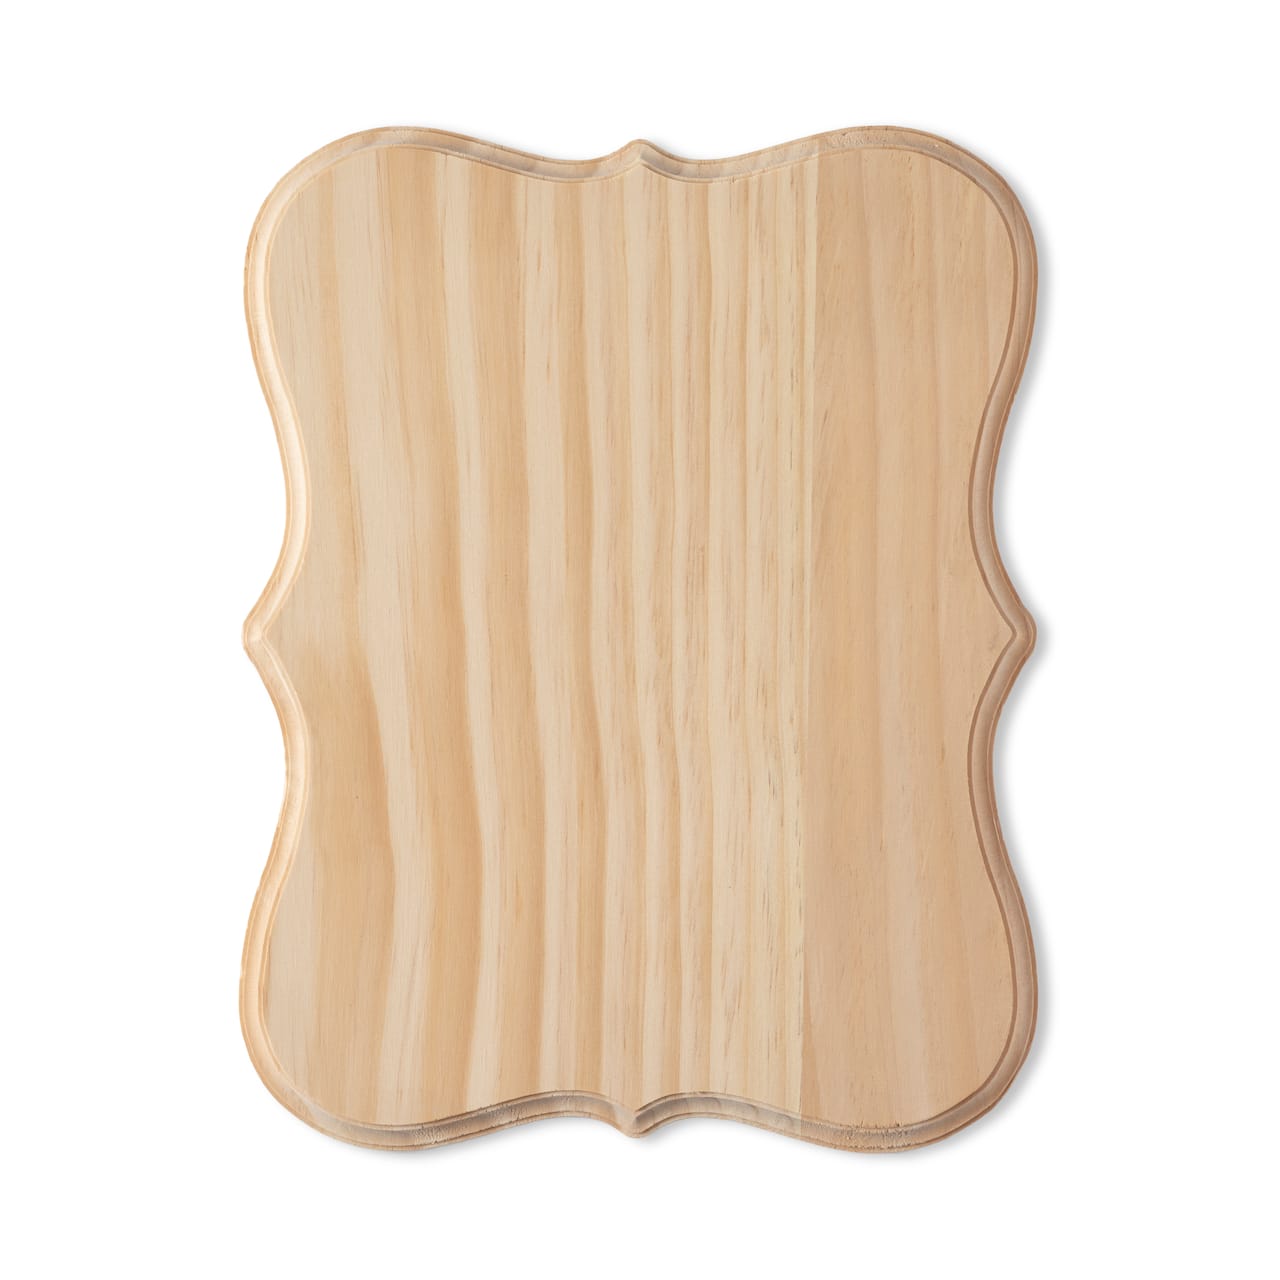 12 x 9 Beveled Wood Parenthesis Plaque by Make Market®